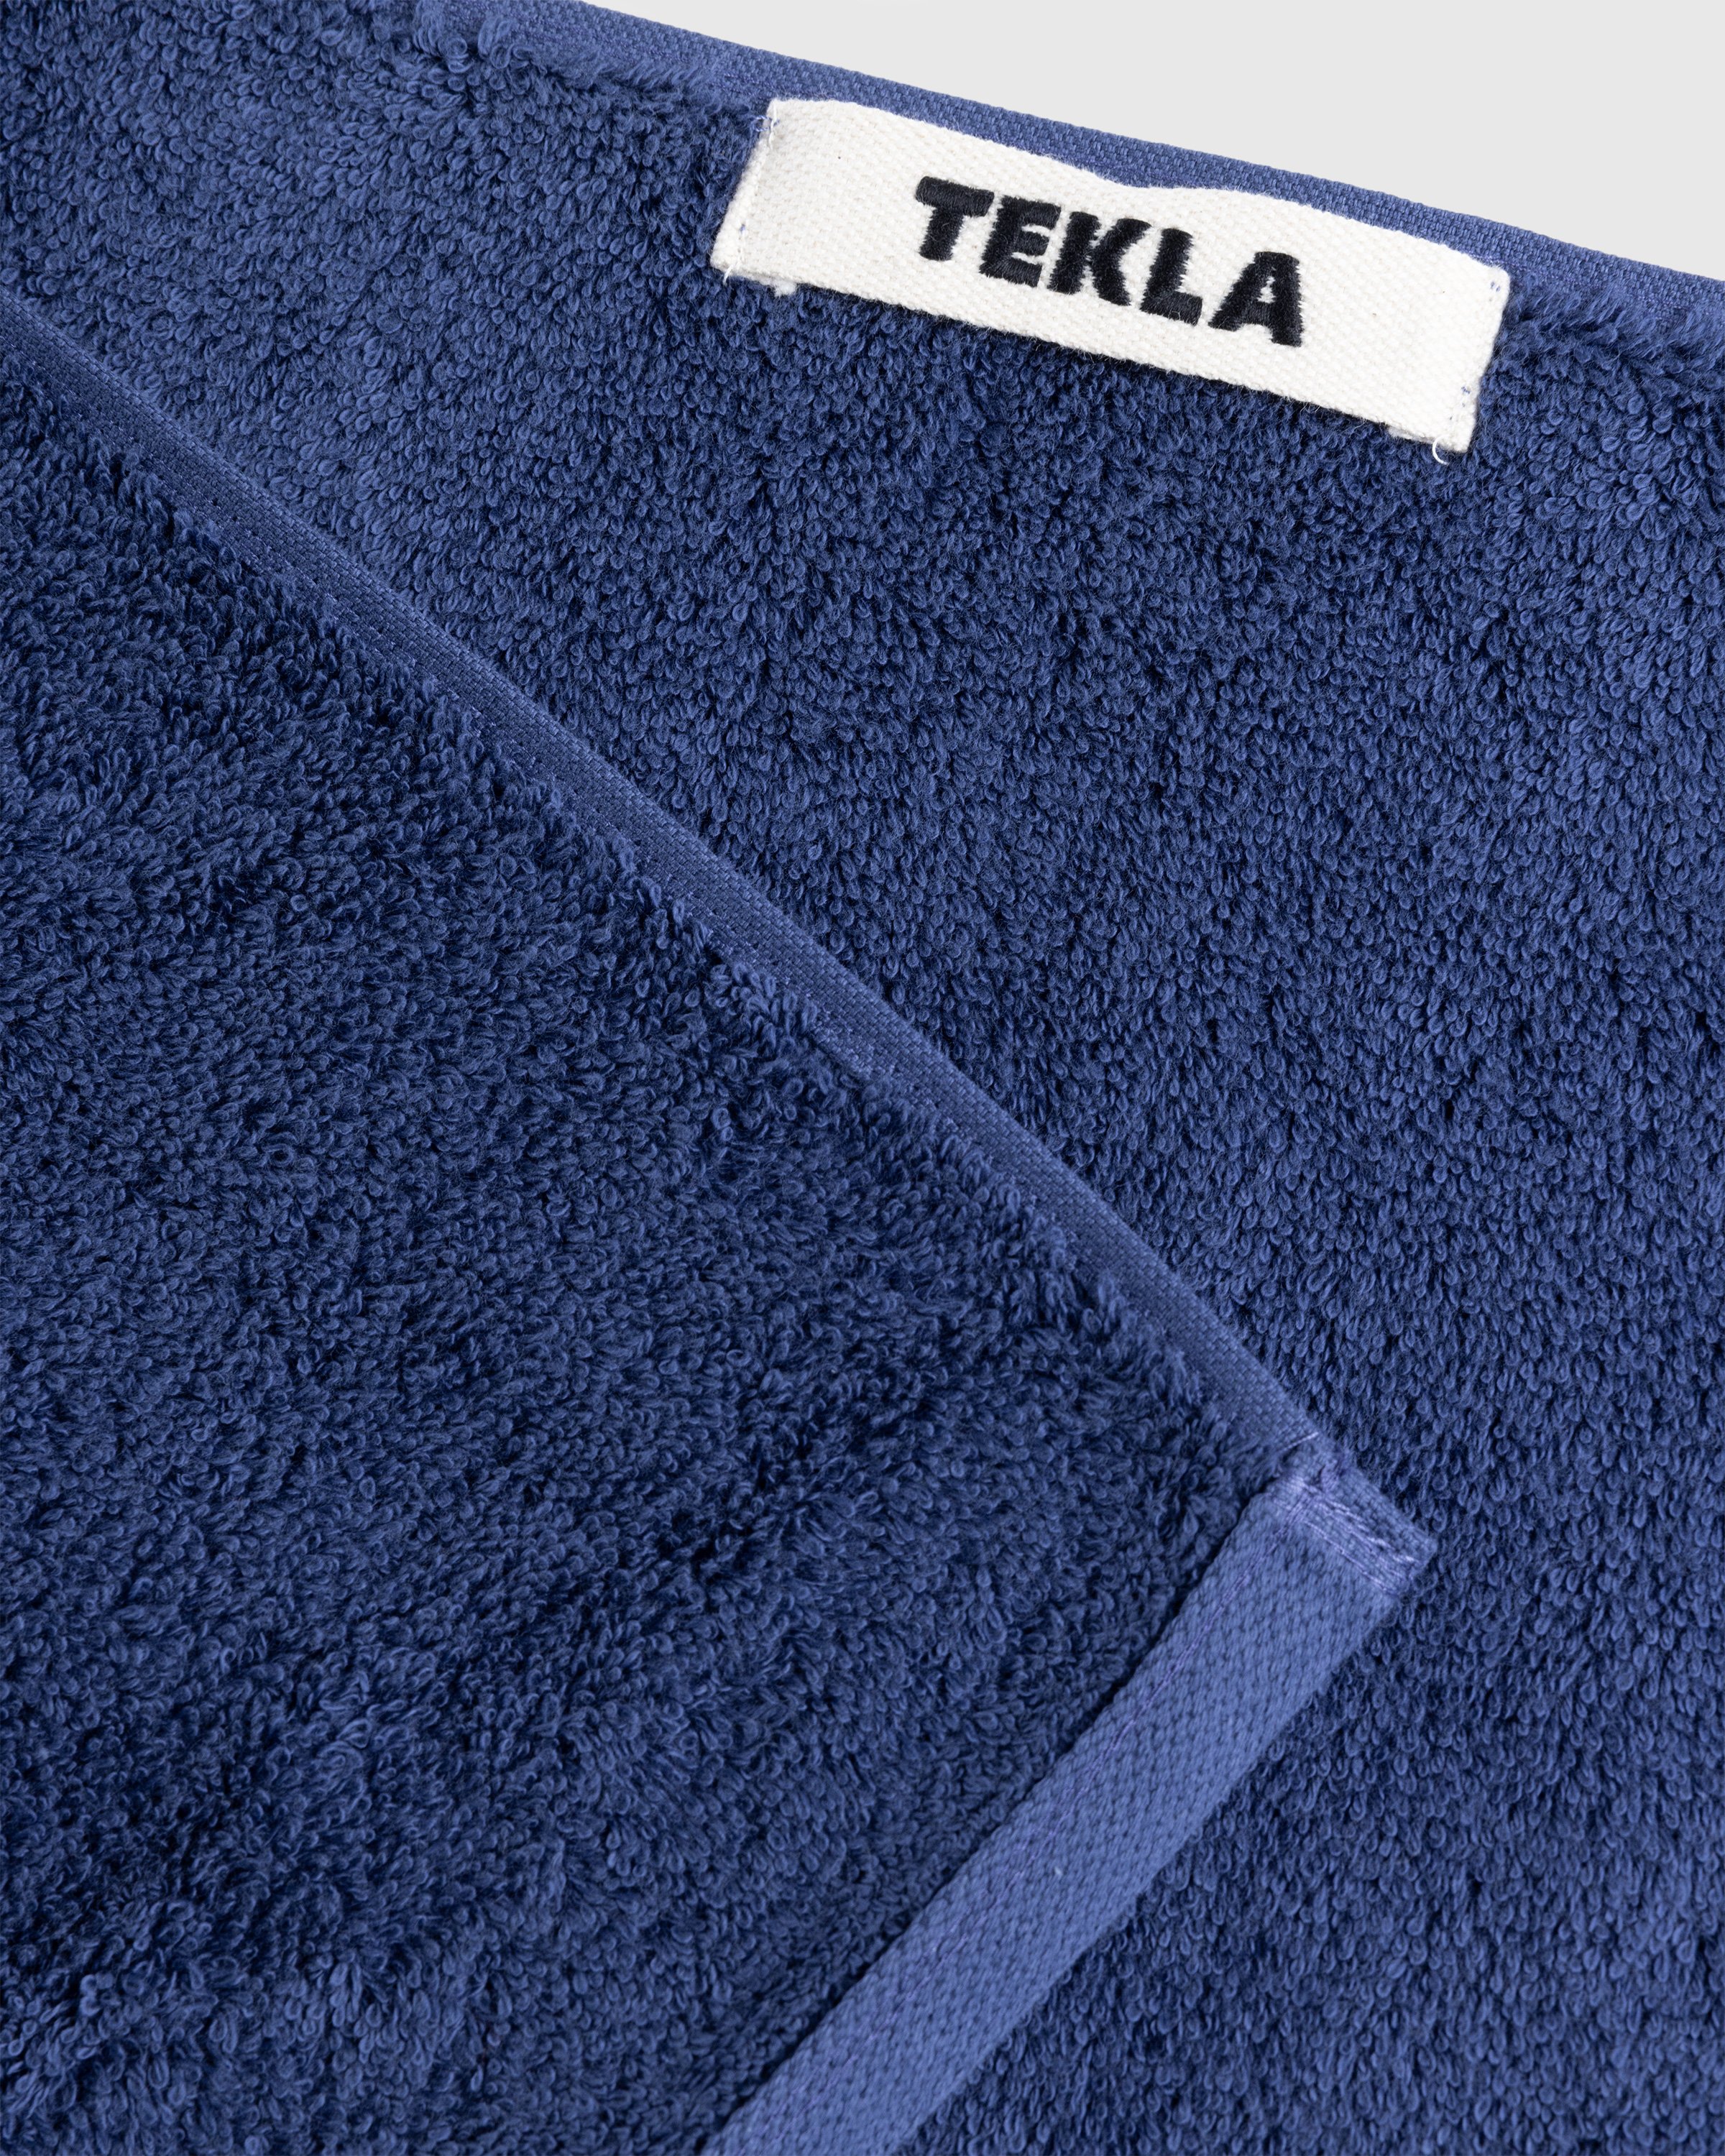 Tekla - Hand Towel 50x80 Navy - Lifestyle - Blue - Image 3